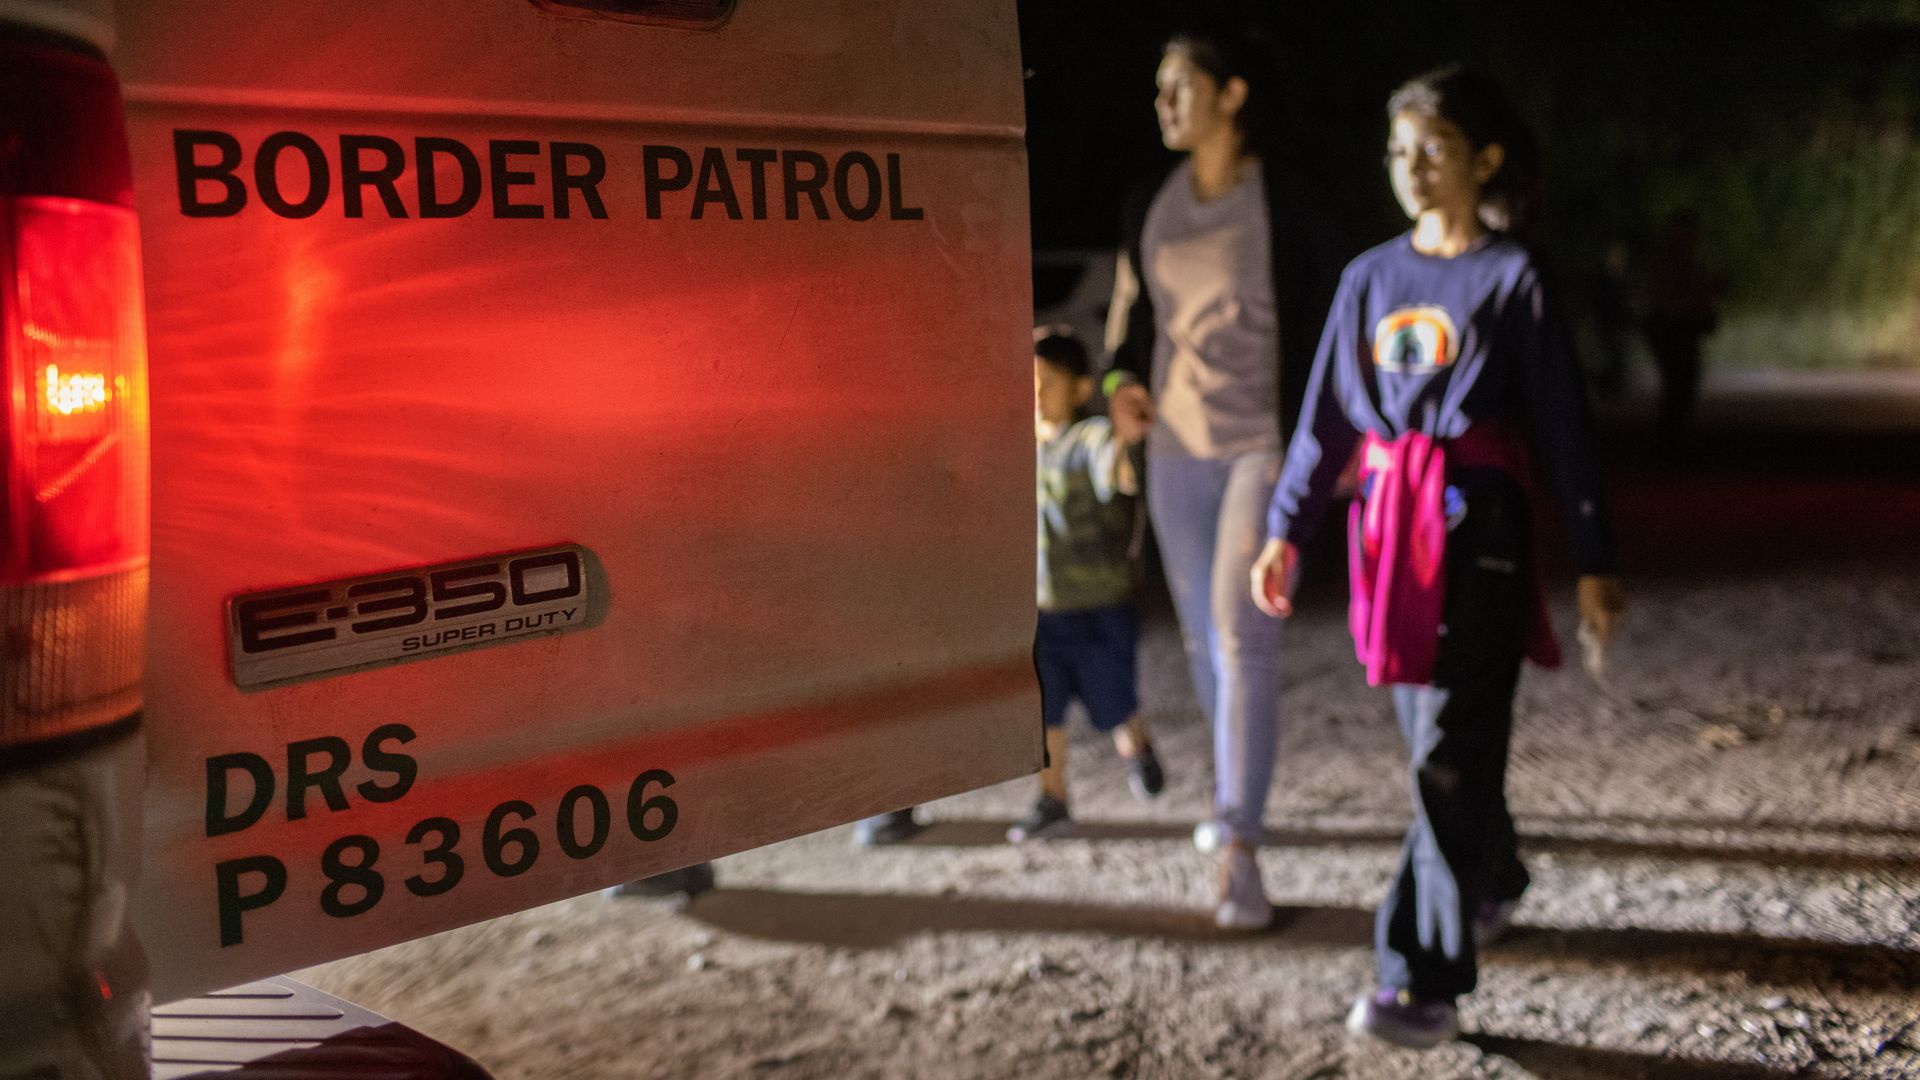 A border patrol vehicle door is illuminated as undocumented asylum seekers walk in the background